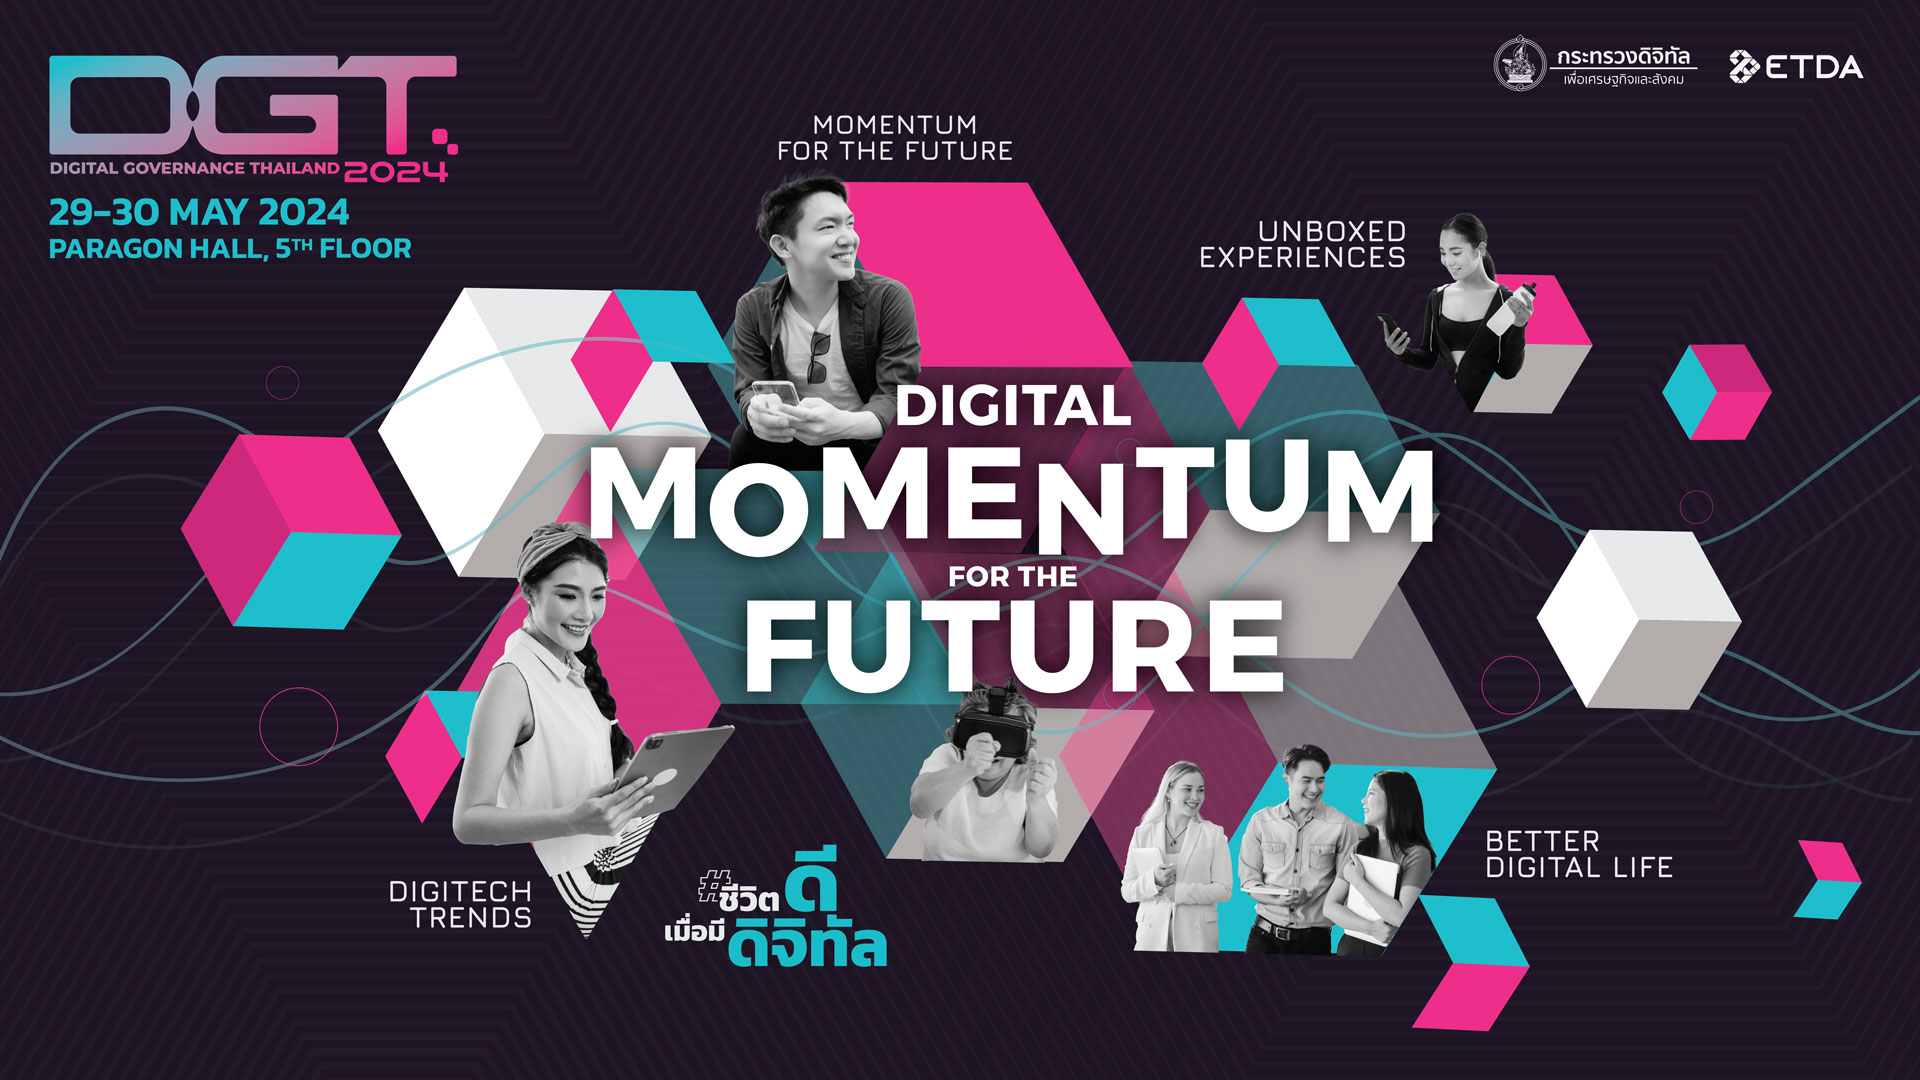  ETDA เปิด Big Event 29-30 พ.ค.นี้  กับ “DGT 2024: Digital Momentum for the Future” มองอนาคตดิจิทัลแบบครบทุกมิติ ล้ำทั้งความคิดและนวัตกรรม เพื่อคนยุคดิจิทัล